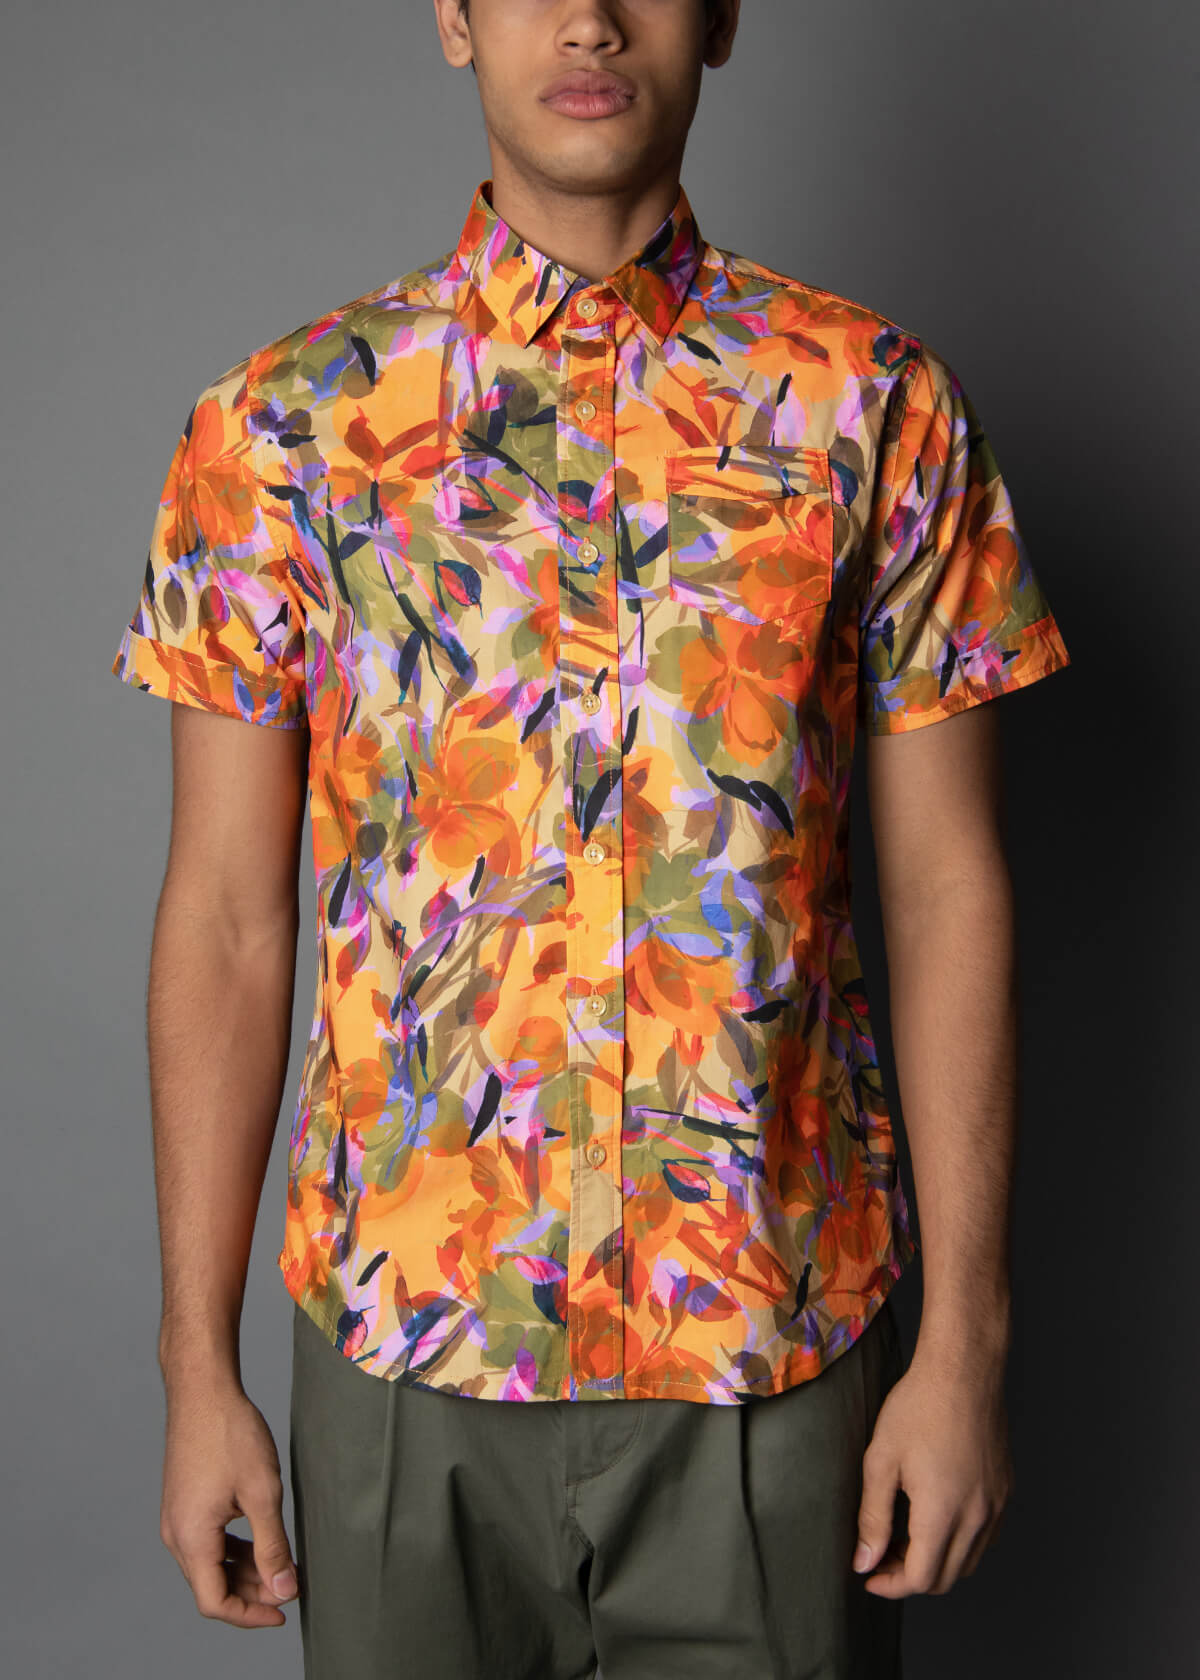 short sleeve flower print mens shirt in orange, yellow and green tones